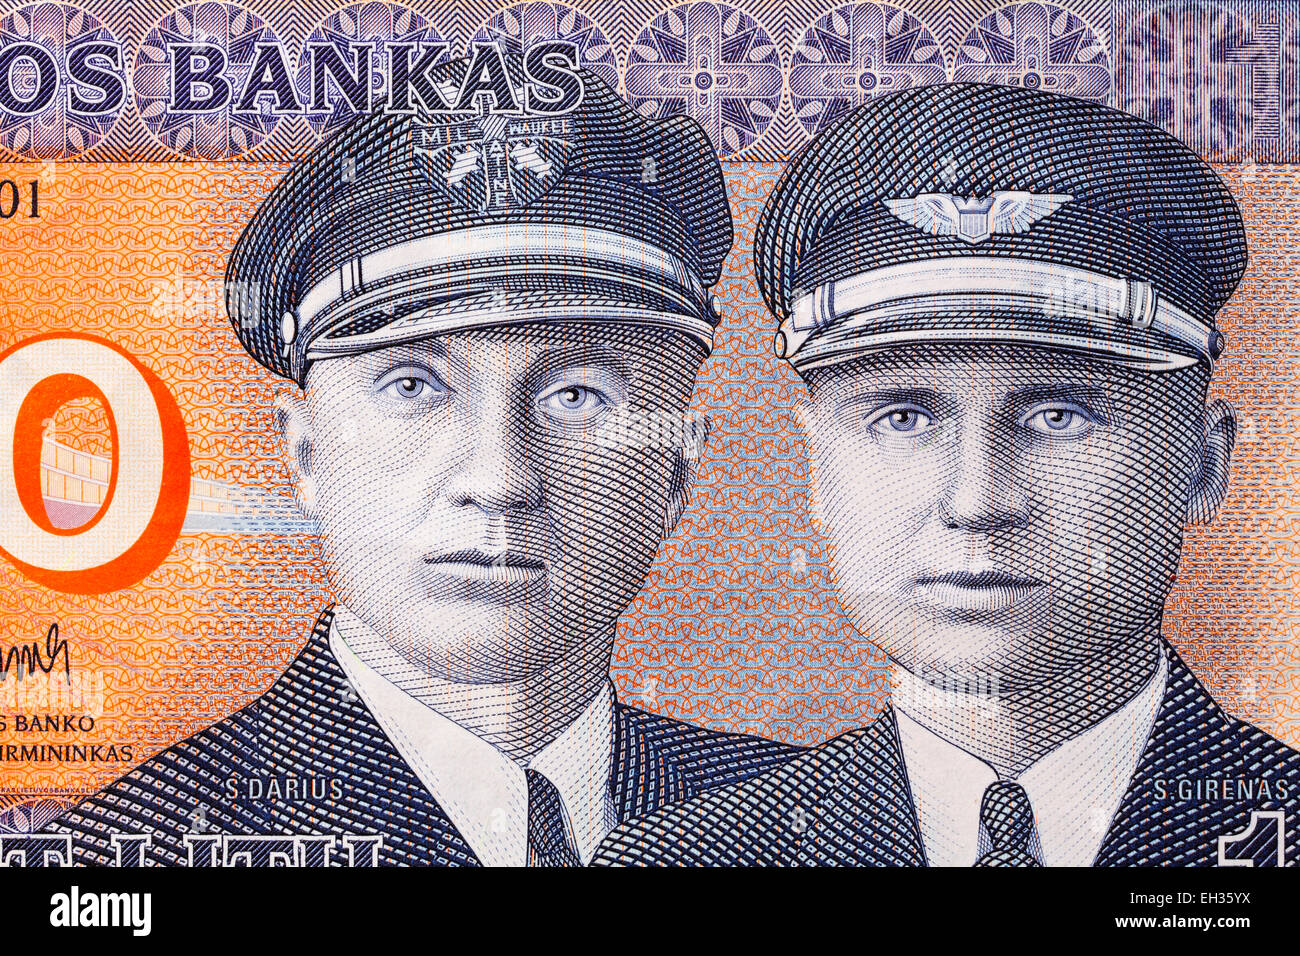 Lithuanian Aviator pilots Steponas Darius and Stasys Girenas from 10 litu banknote, Lithuania, 2001 Stock Photo